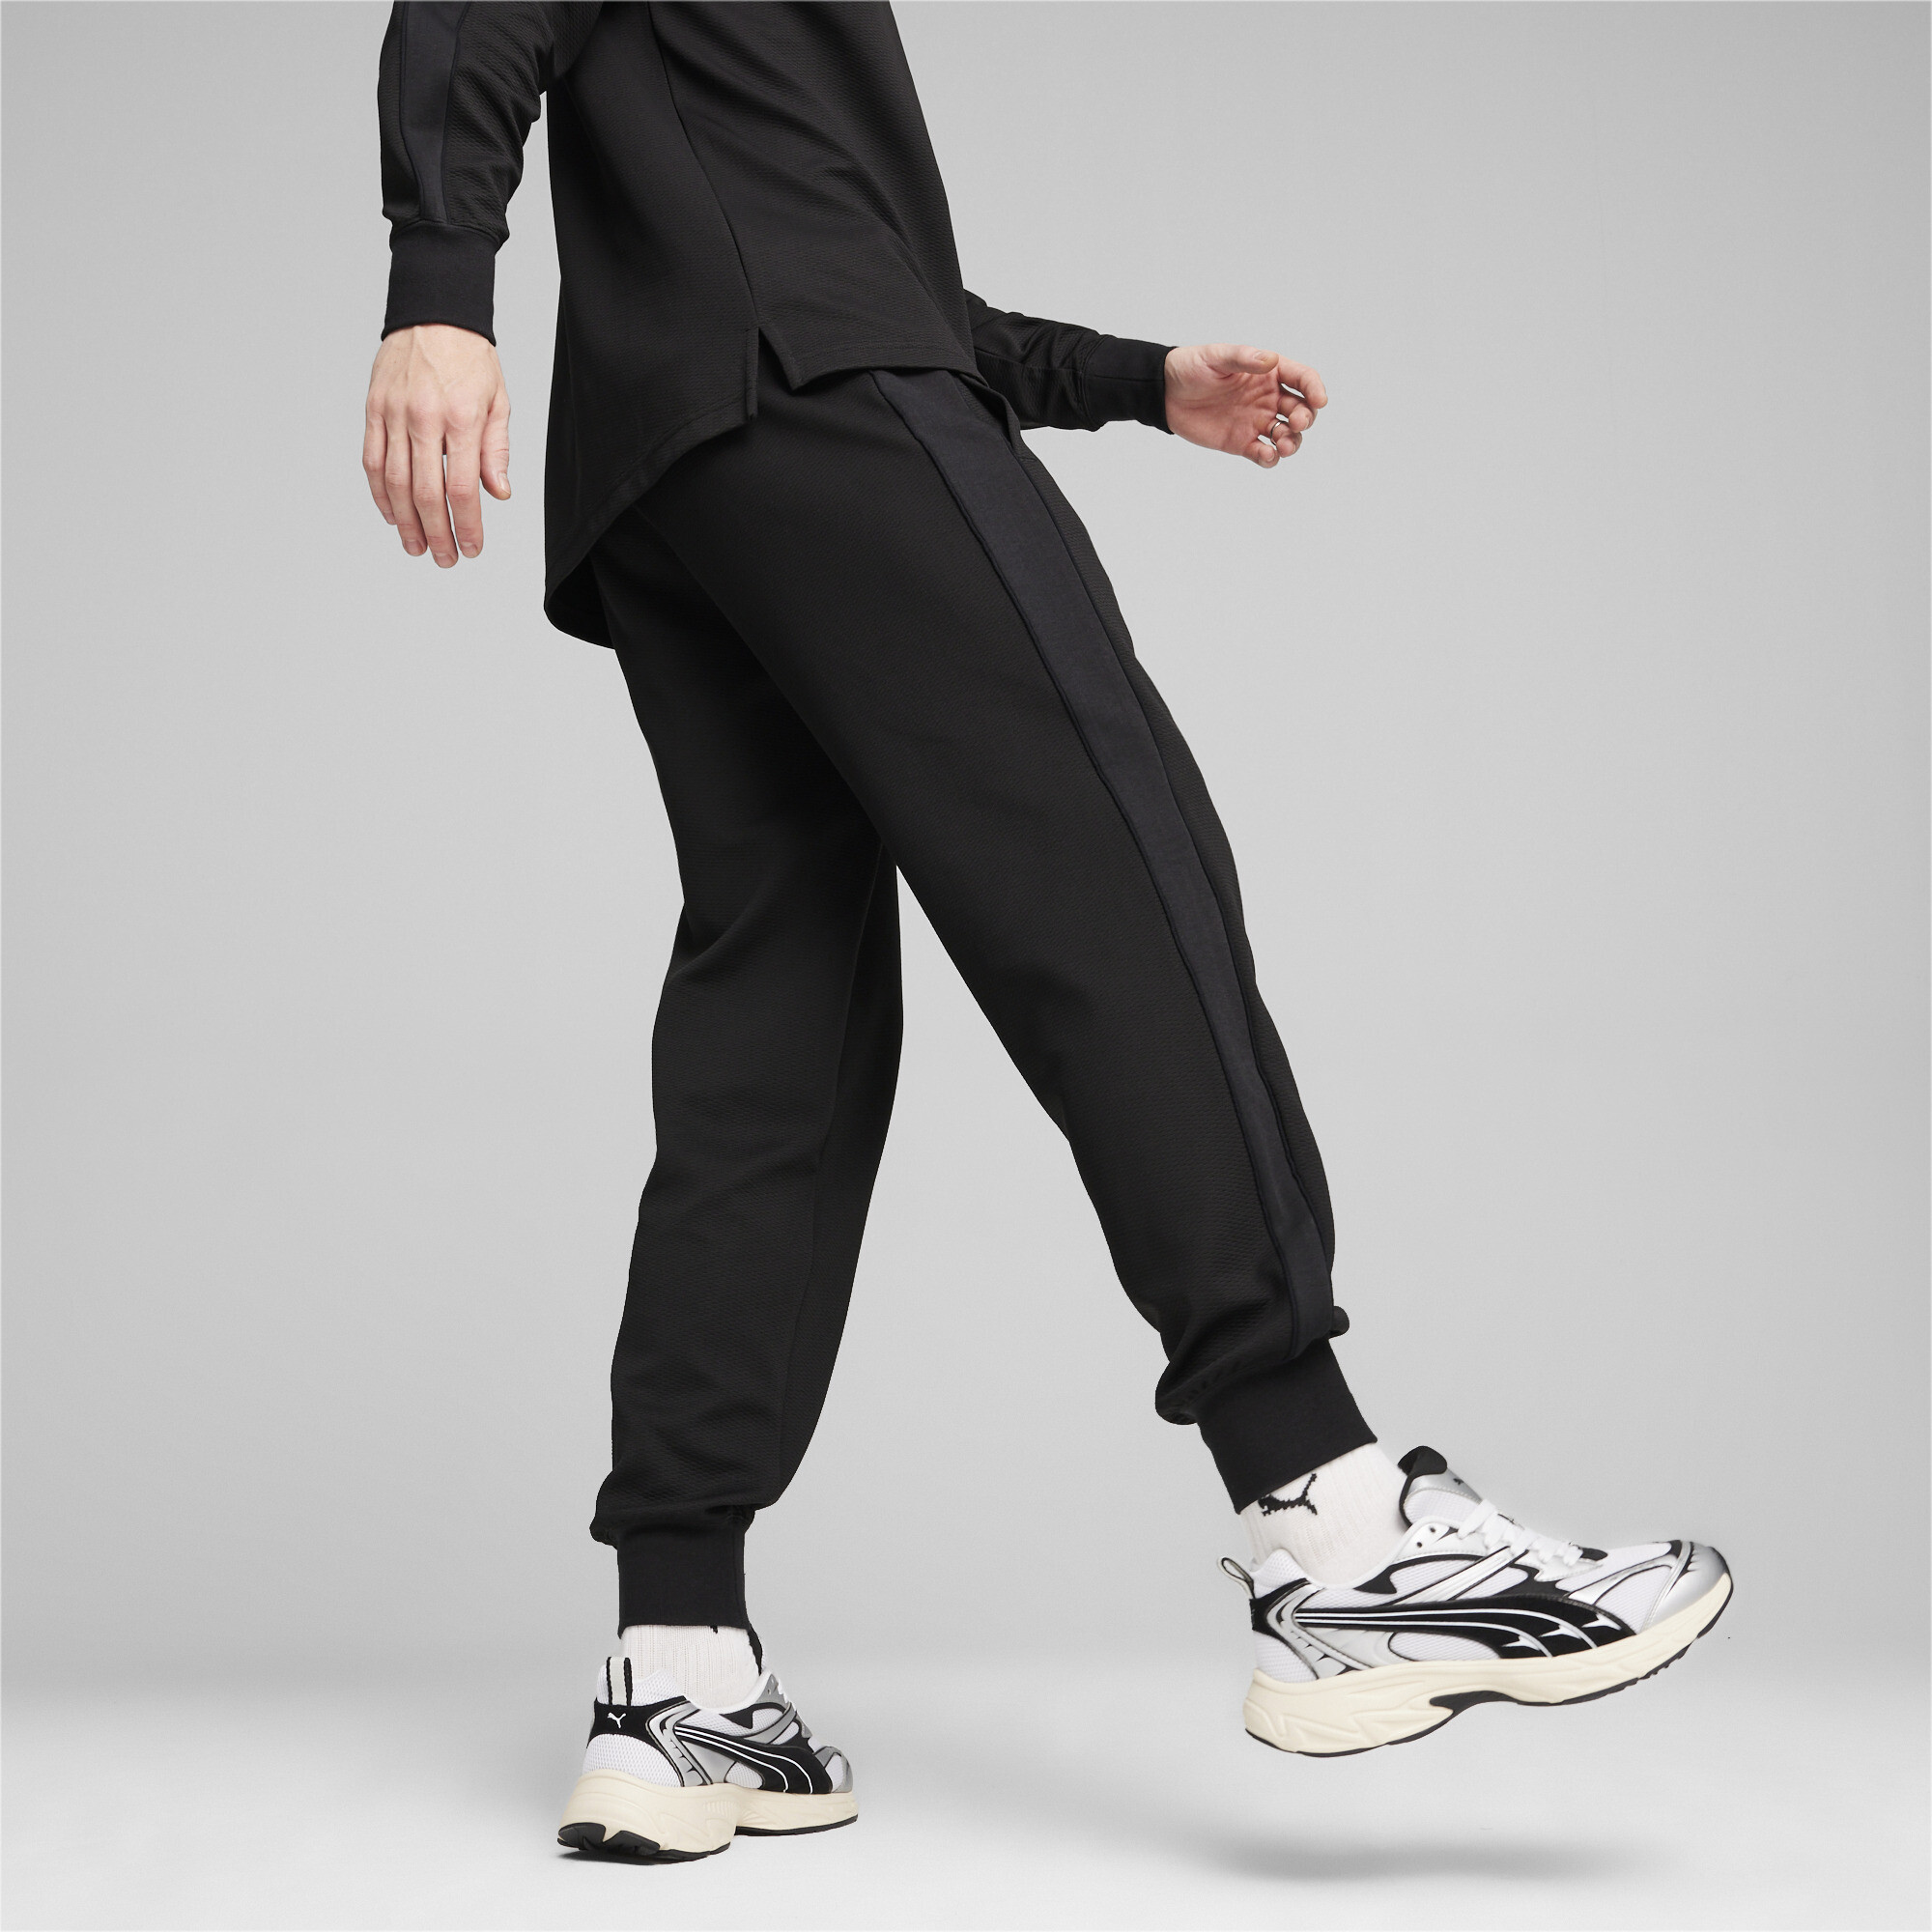 Men's Puma T7's Track Pants, Black, Size XL, Clothing